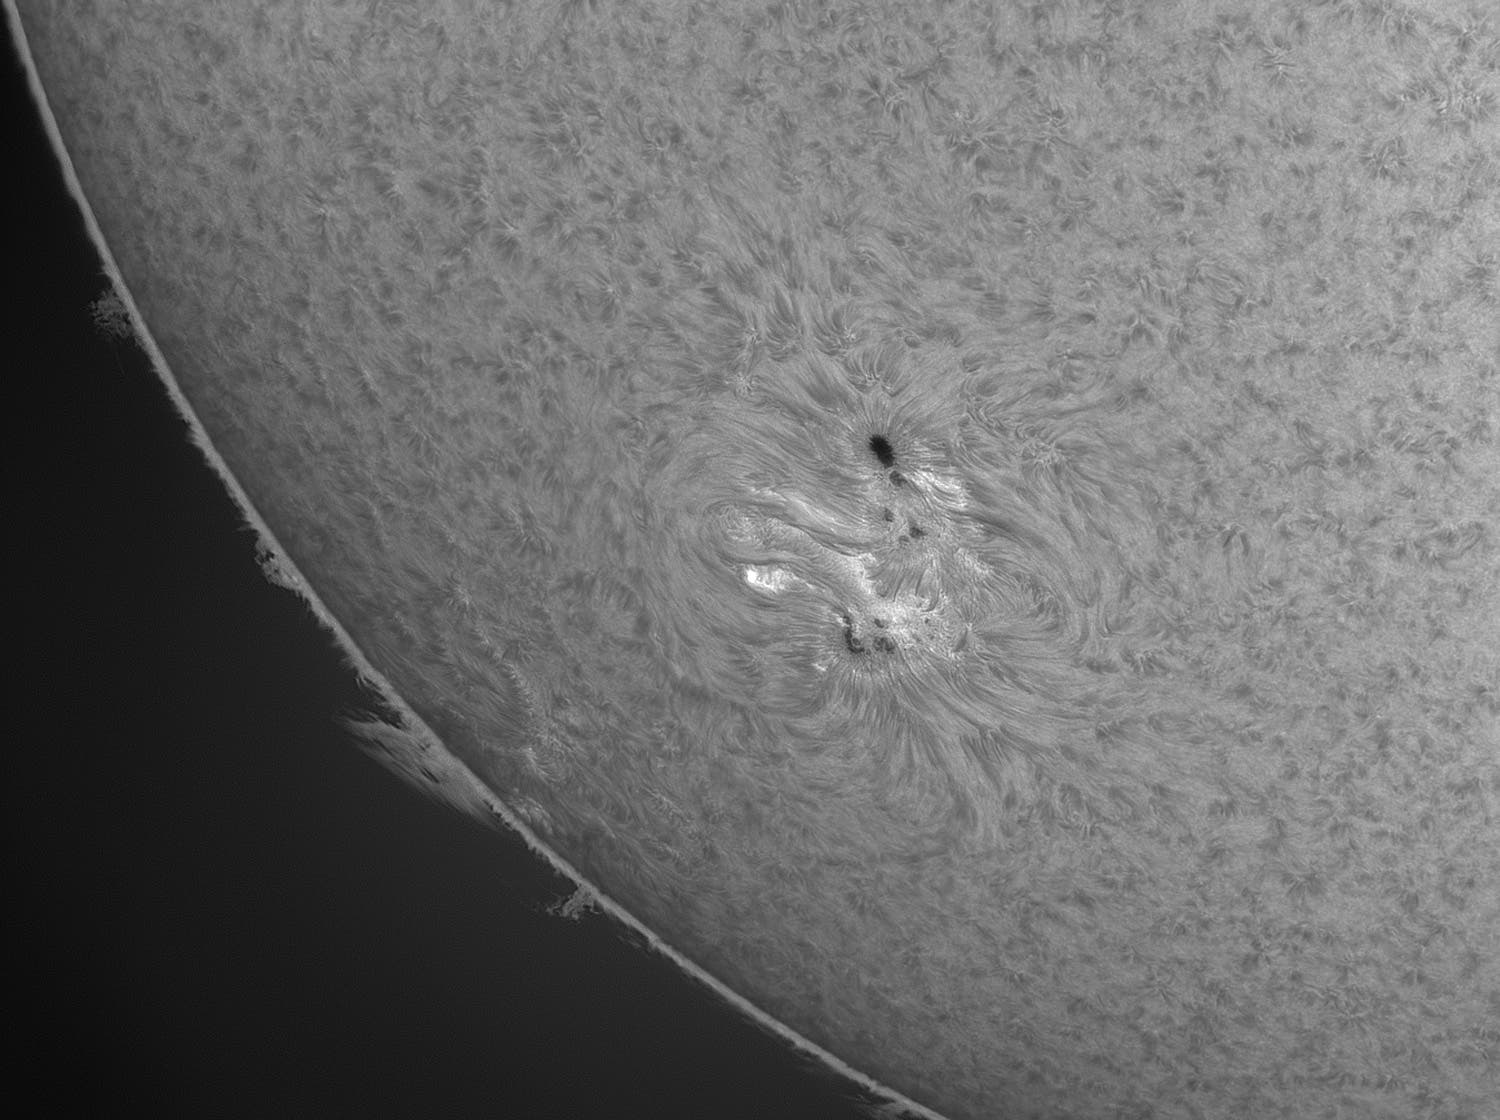 H-alpha-Sonne am 5. März 2011, Teil 2